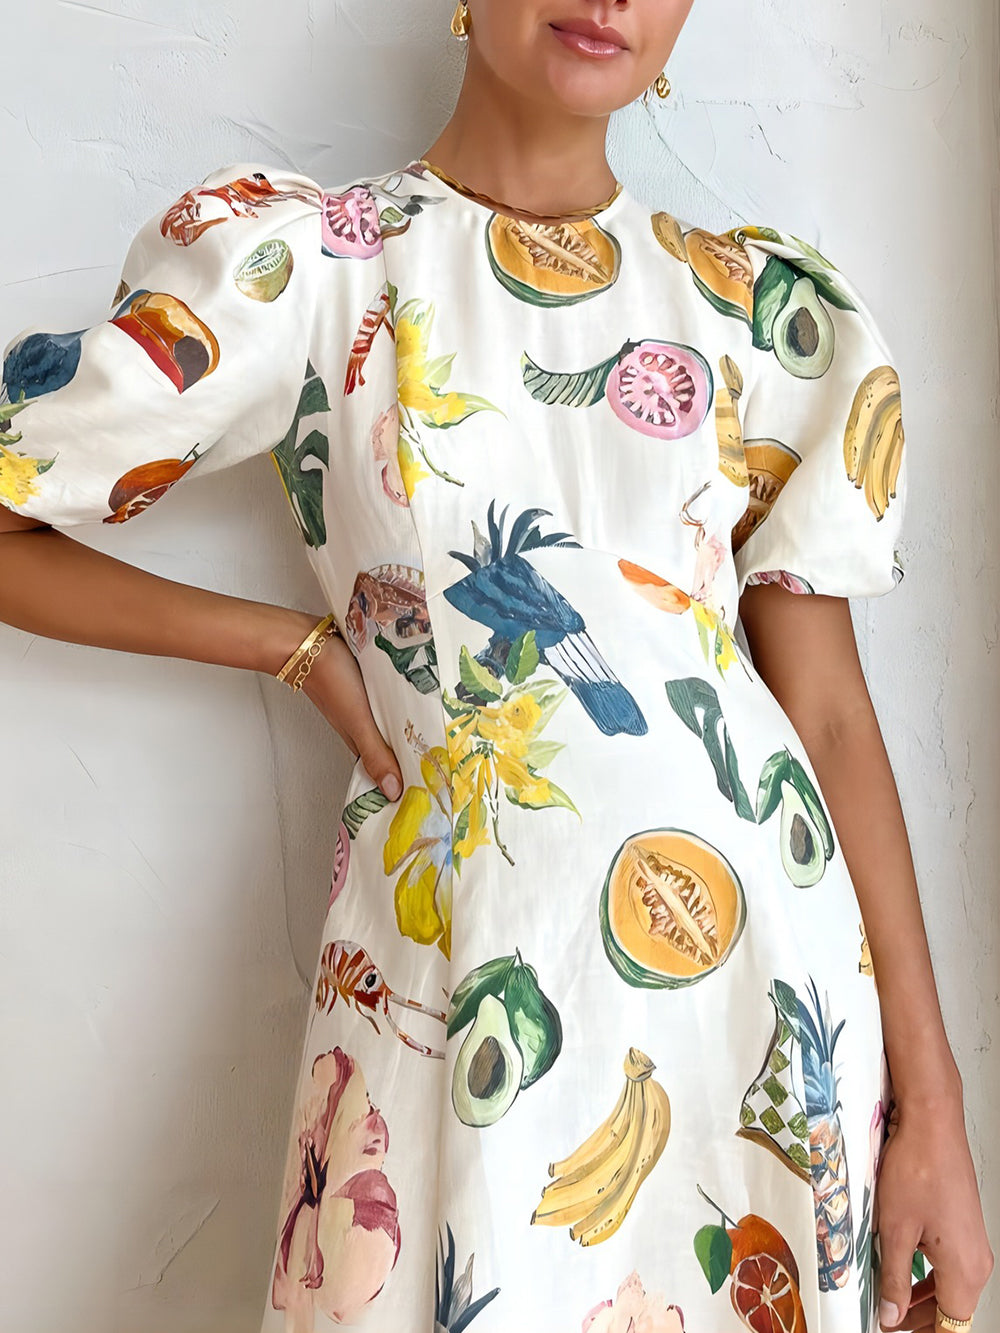 फैशन ग्रैफ़िटी प्रिंट स्लिम फ़िट बहुमुखी मैक्सी ड्रेस